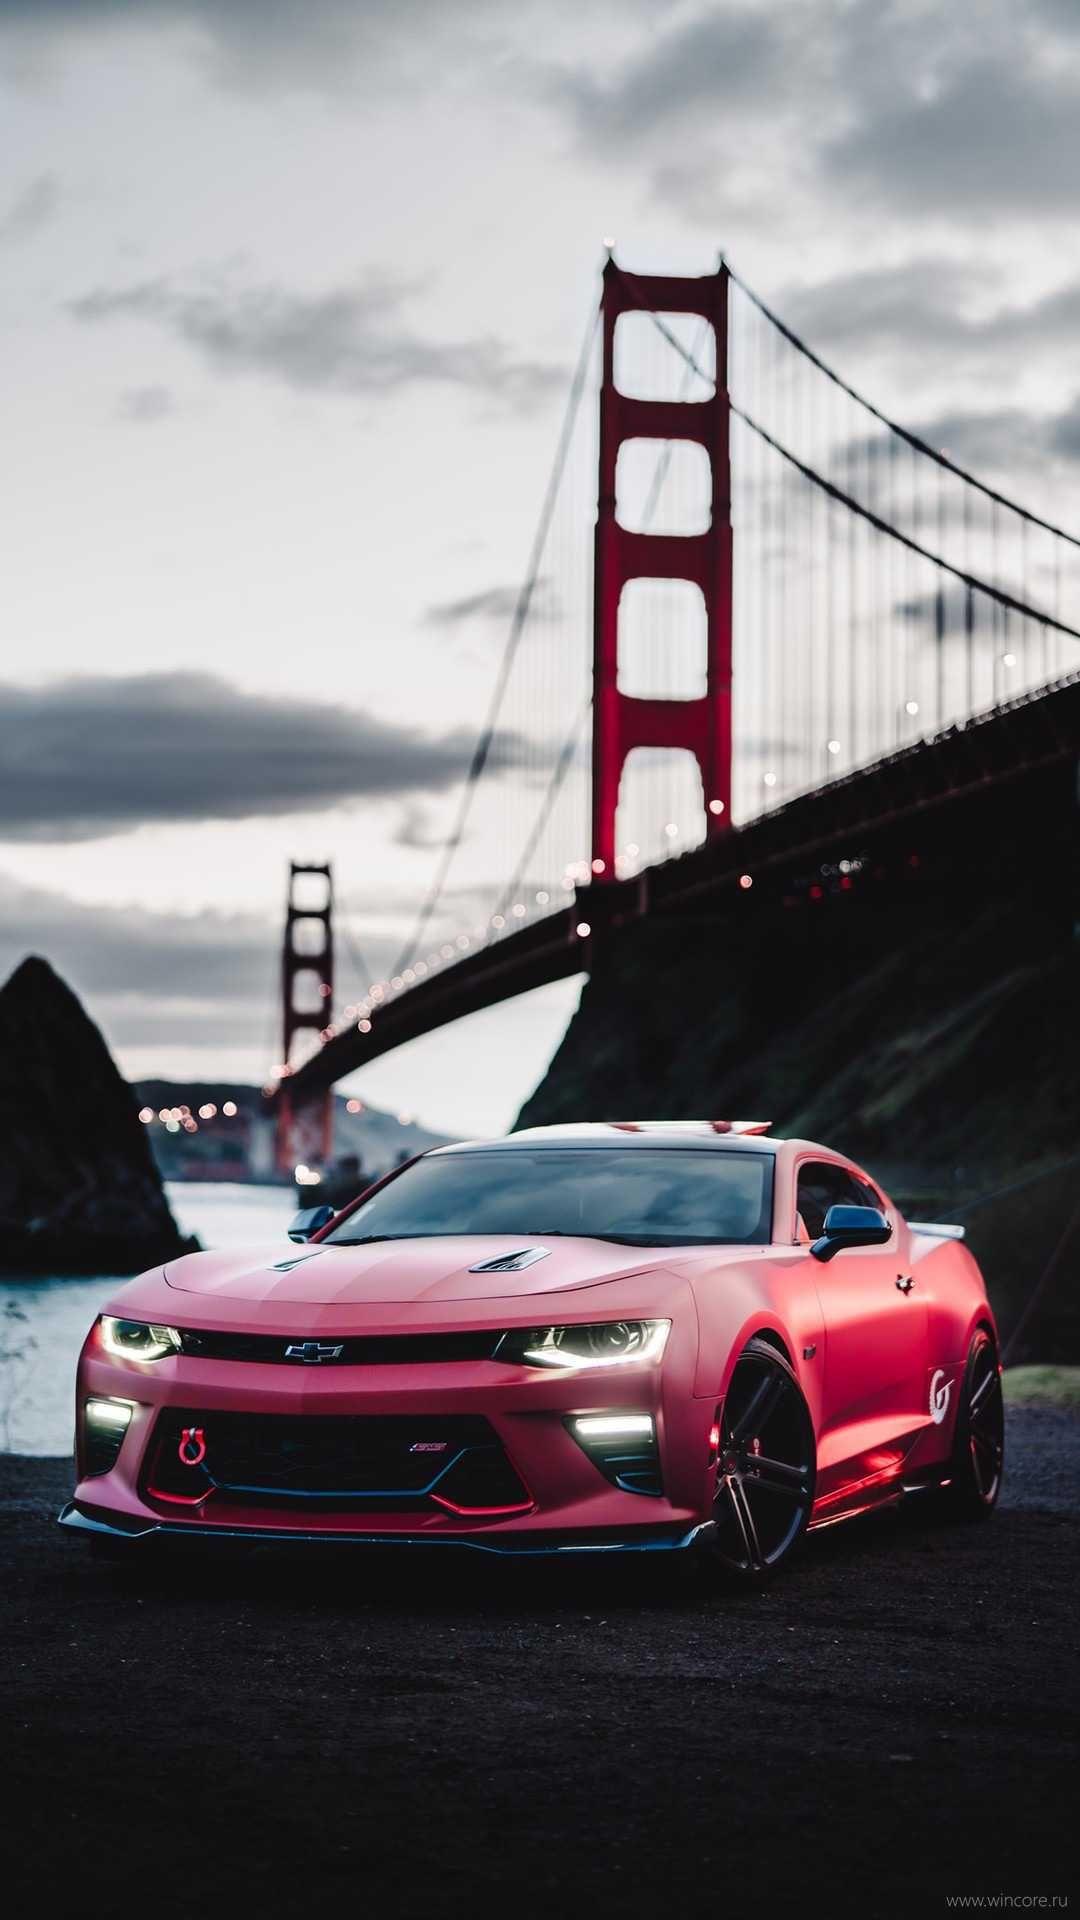 Chevrolet Camaro Golden Gate Bridge iPhone Wallpaper